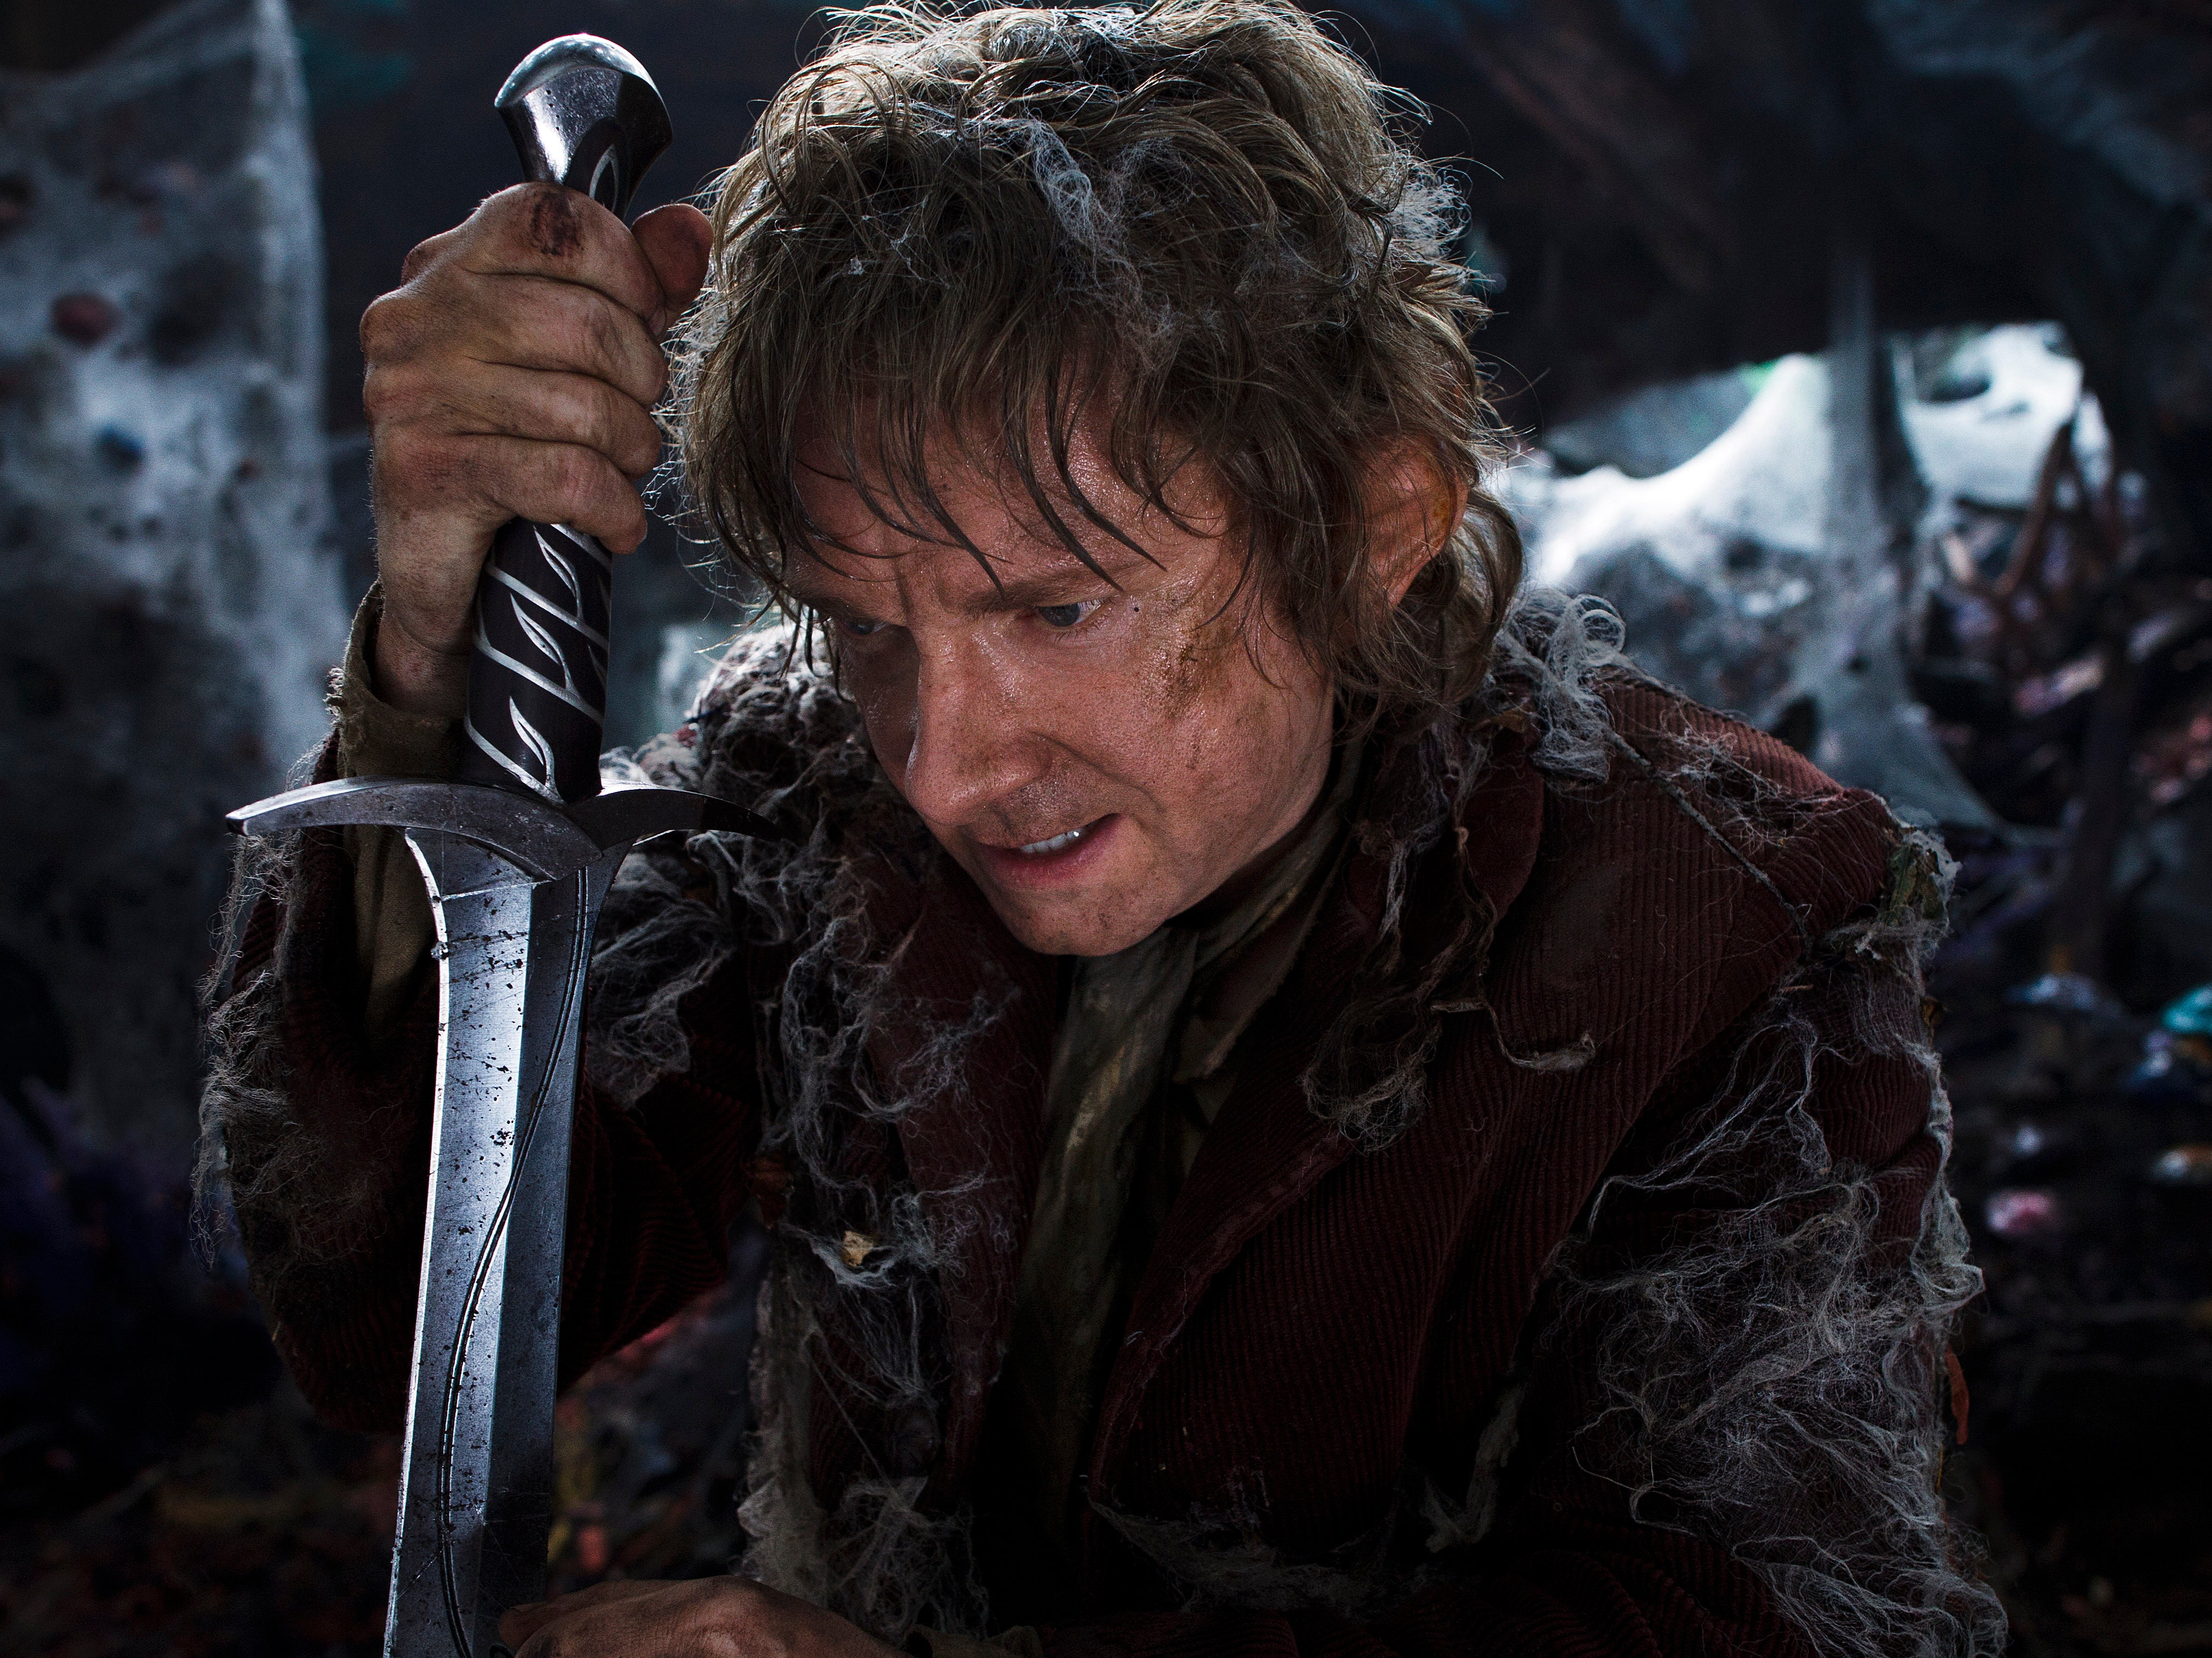 Martin Freeman as Bilbo Baggins in ‘The Hobbit: An Unexpected Journey'